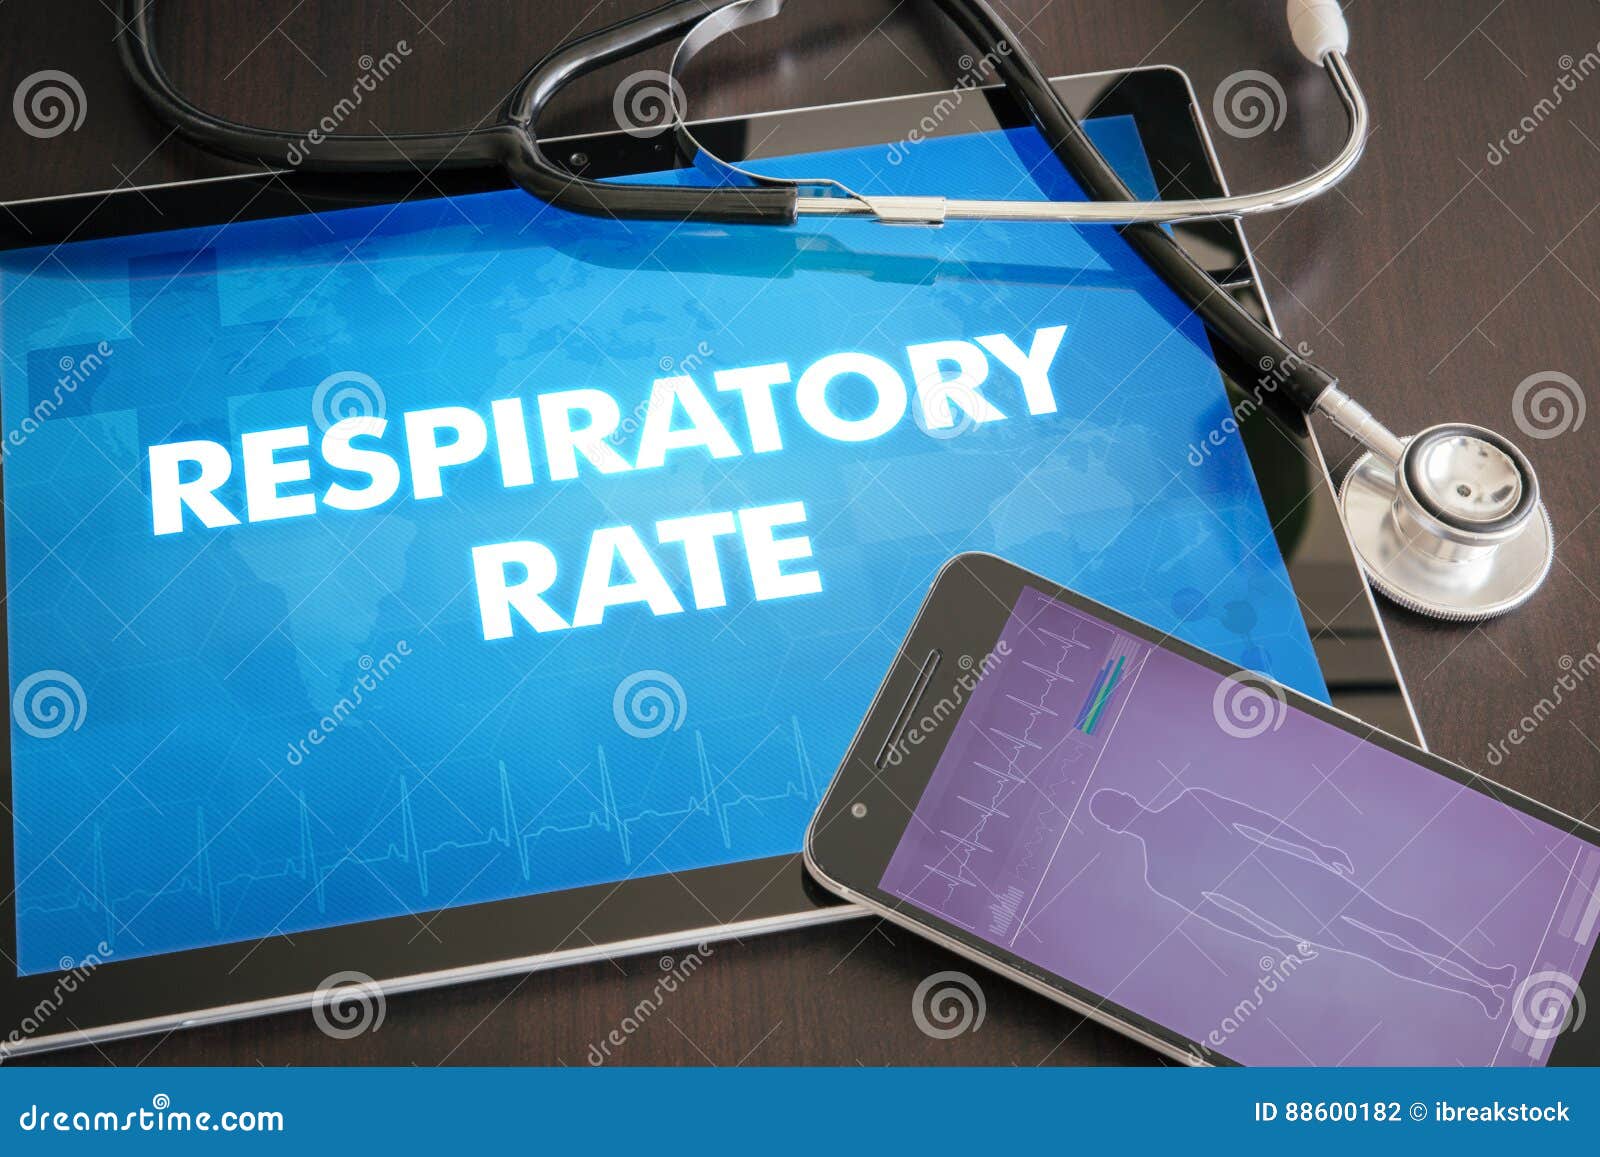 Respiratory rate